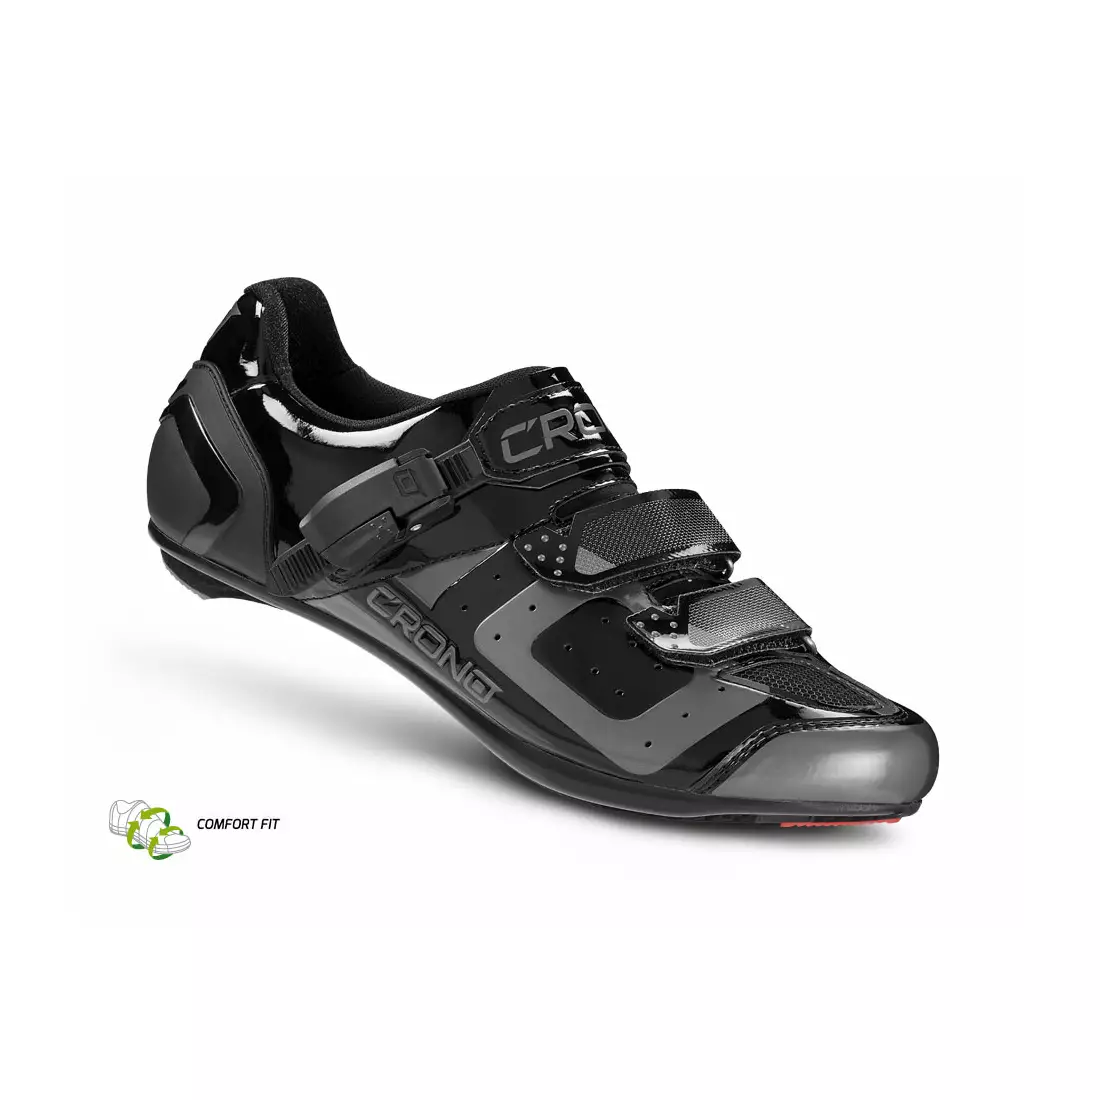 CRONO CR3 nylon - road cycling shoes, black